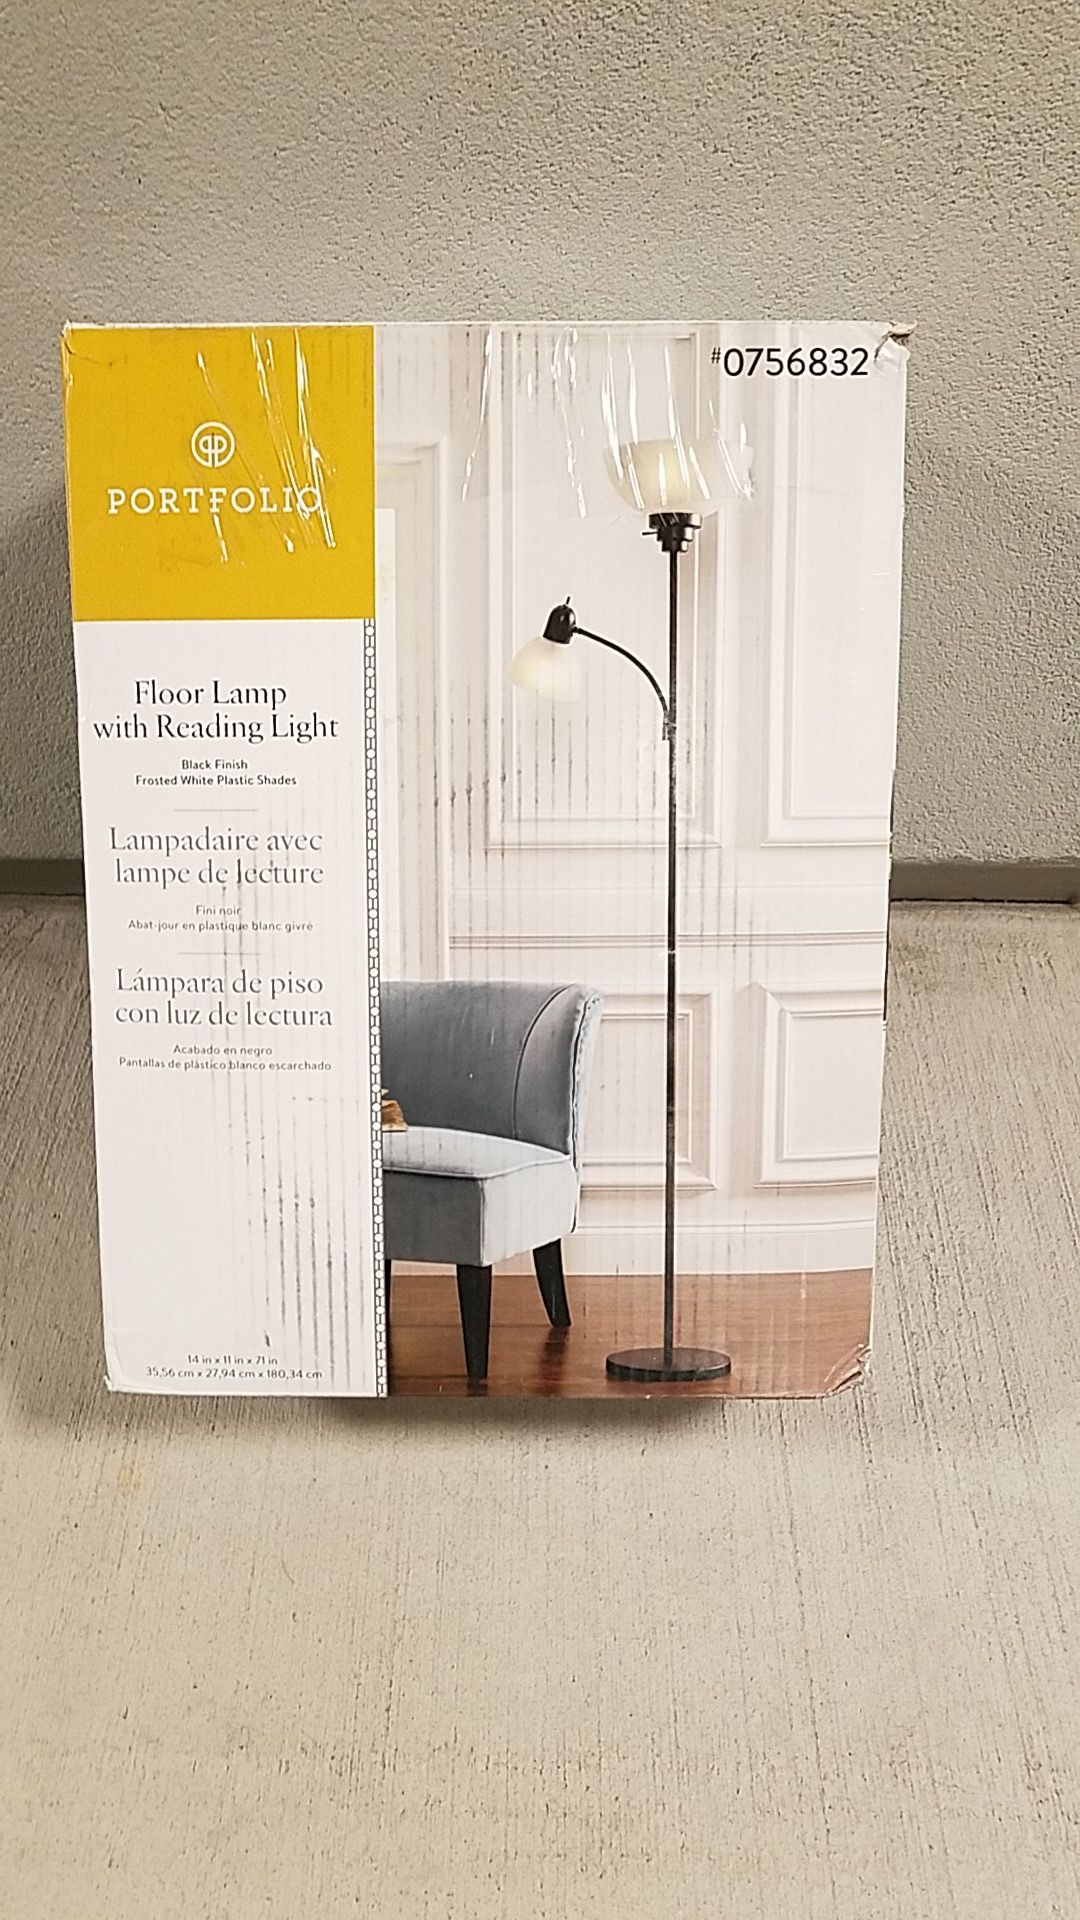 Portfolio Floor Lamp with Reading Light(NEW IN THE BOX)